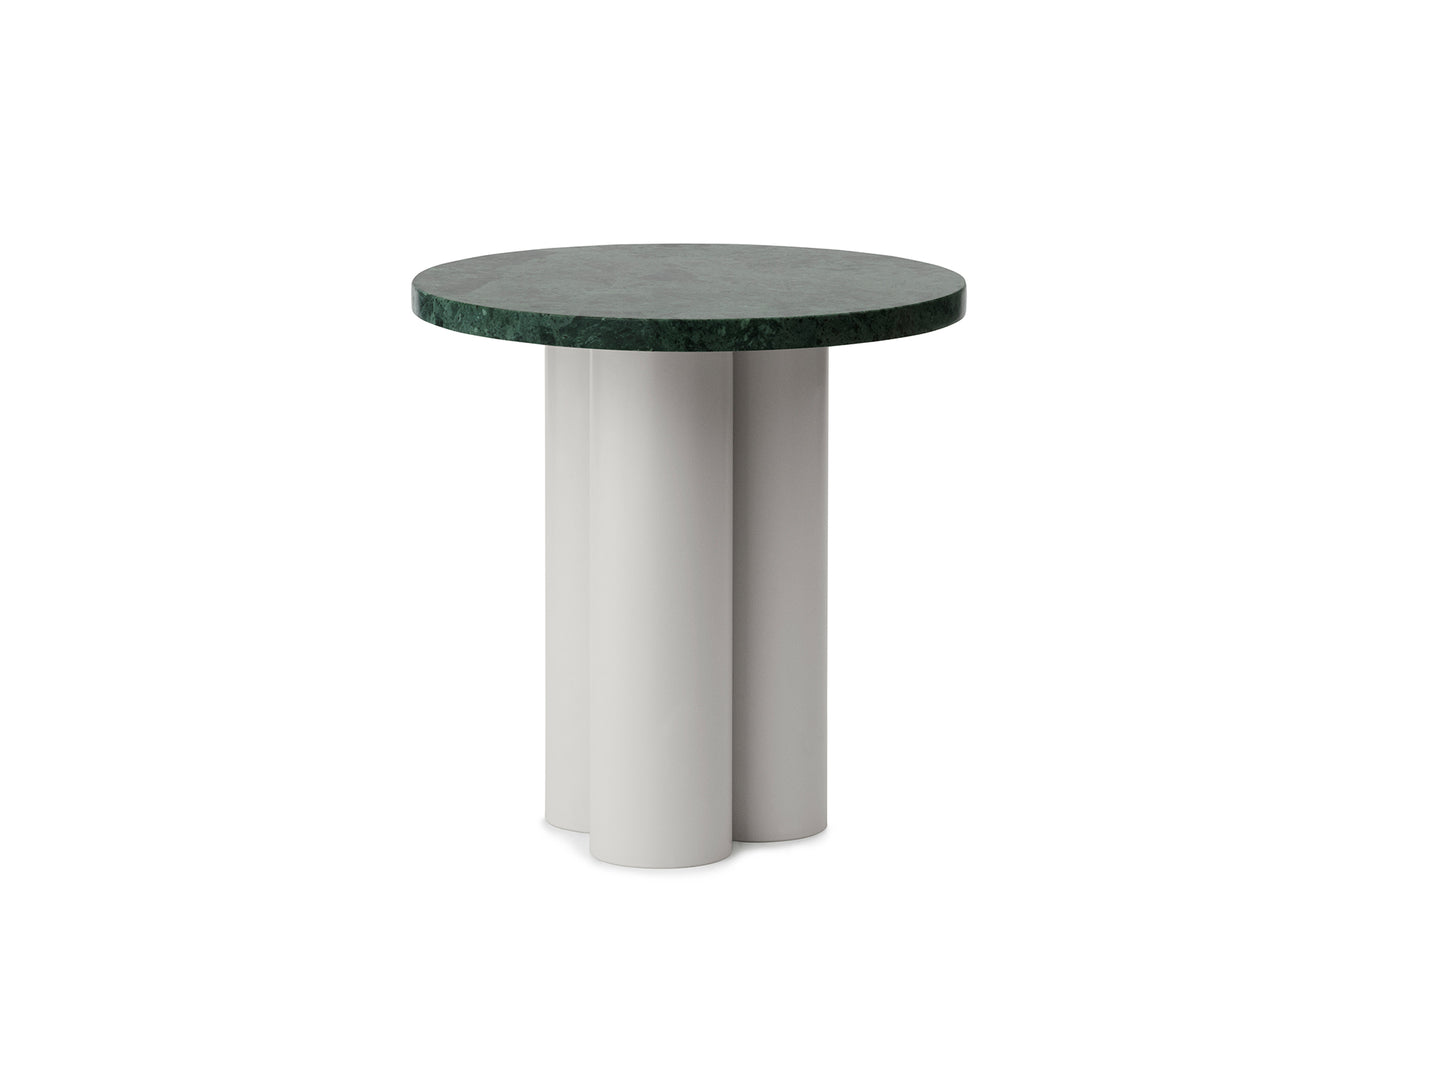 Dit Side Table by Normann Copenhagen - Sand Base / Verde Marina